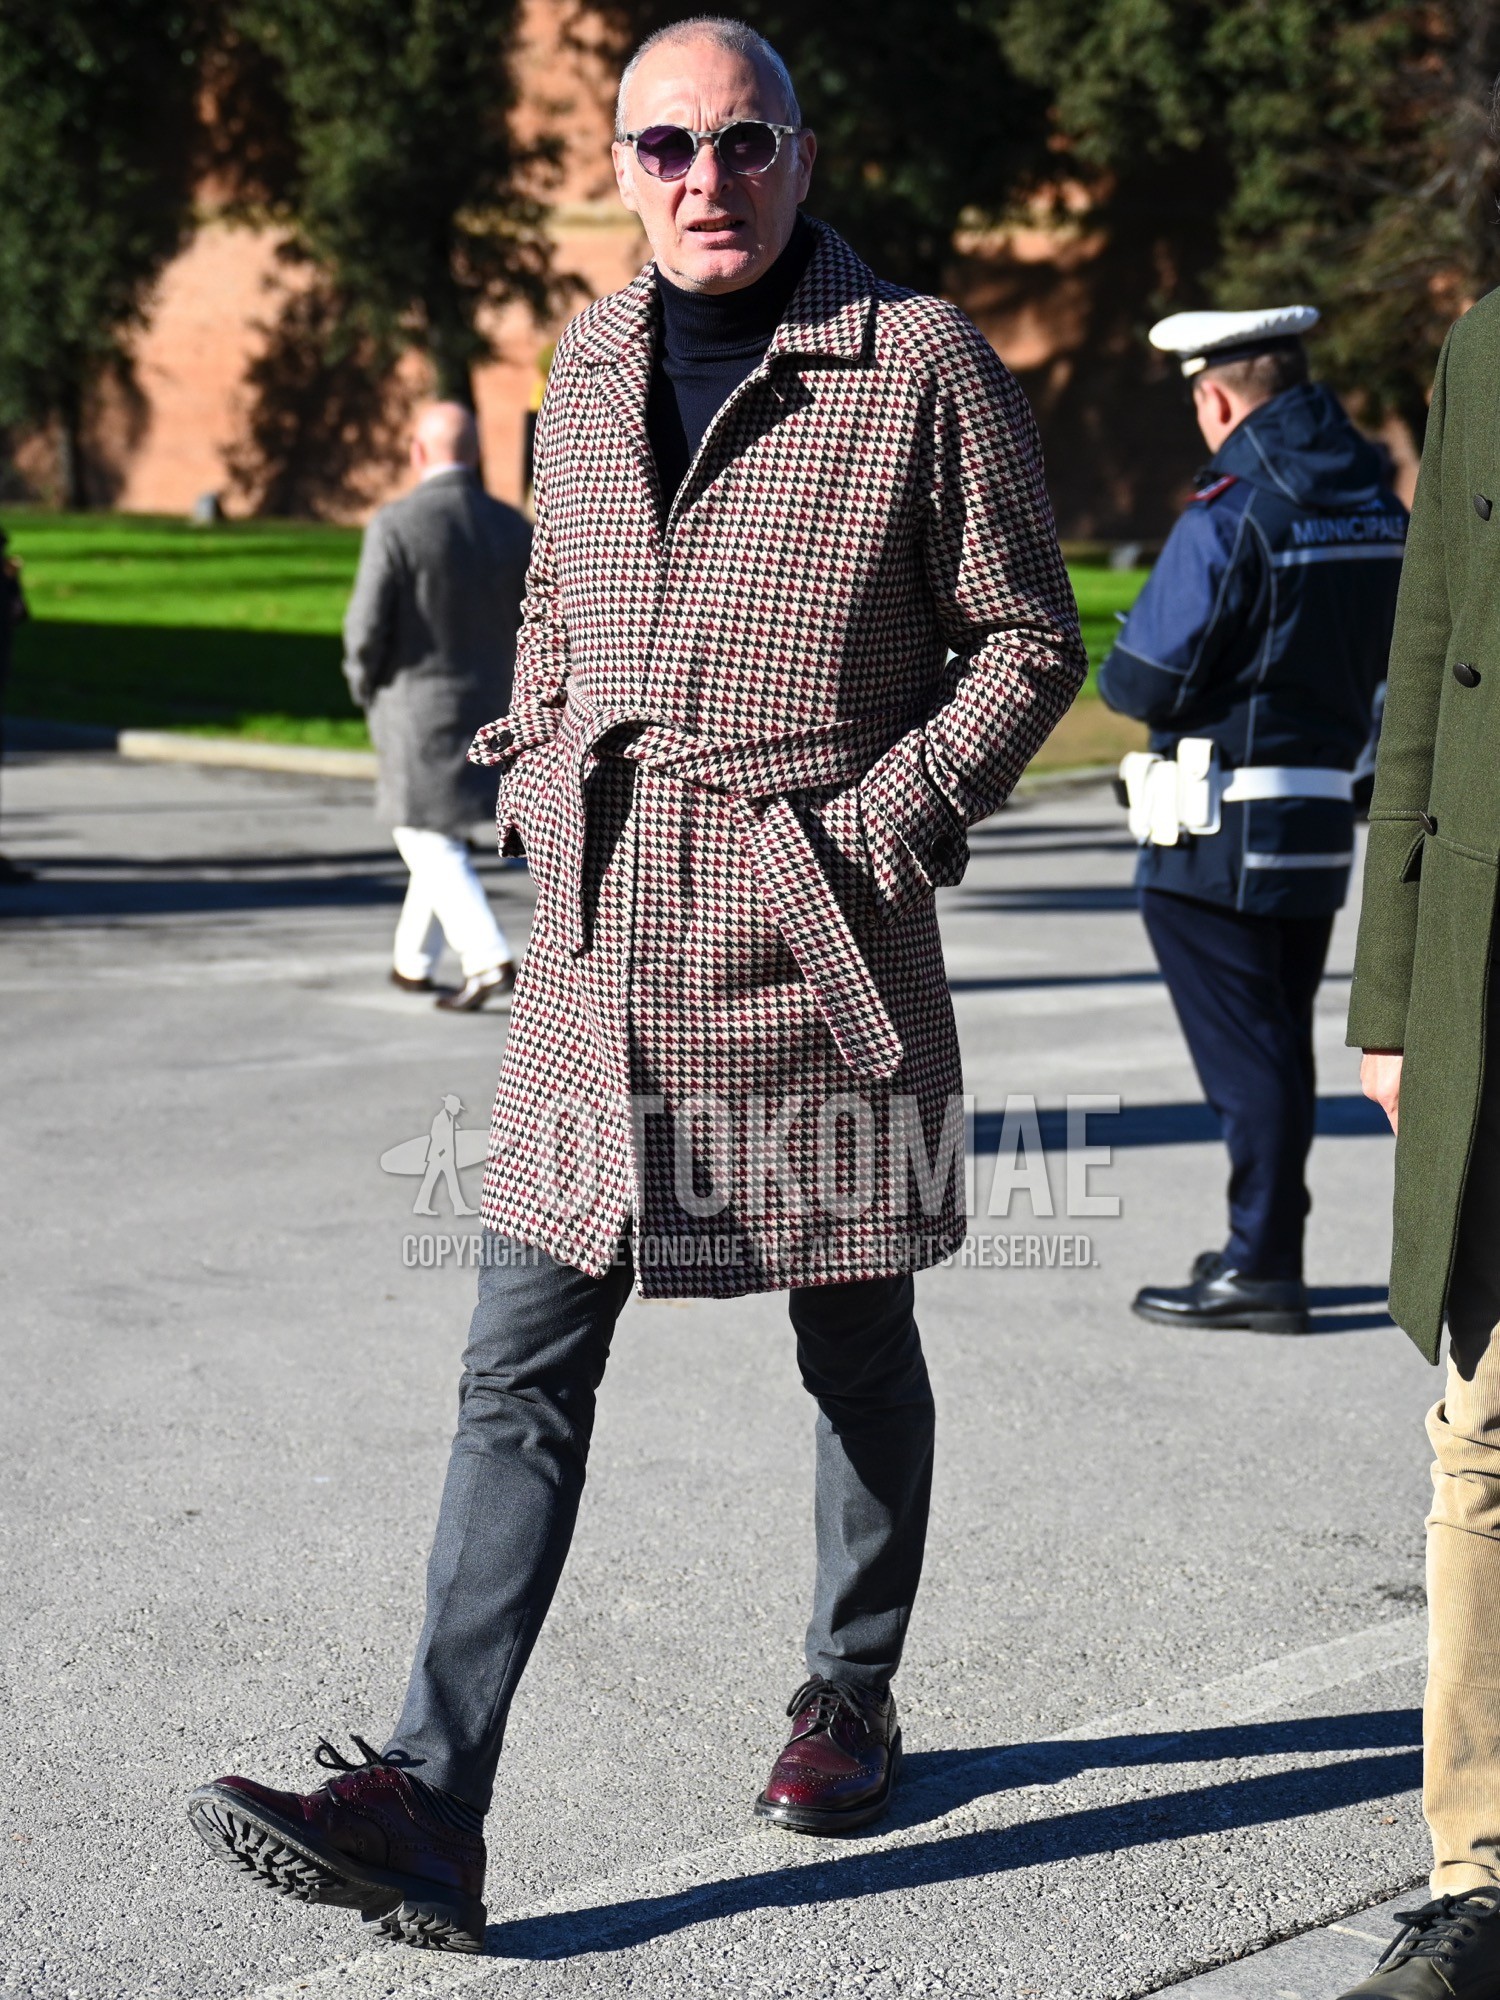 Men's autumn winter outfit with silver purple plain sunglasses, beige red black check belted coat, navy plain turtleneck knit, gray plain slacks, red brogue shoes leather shoes.